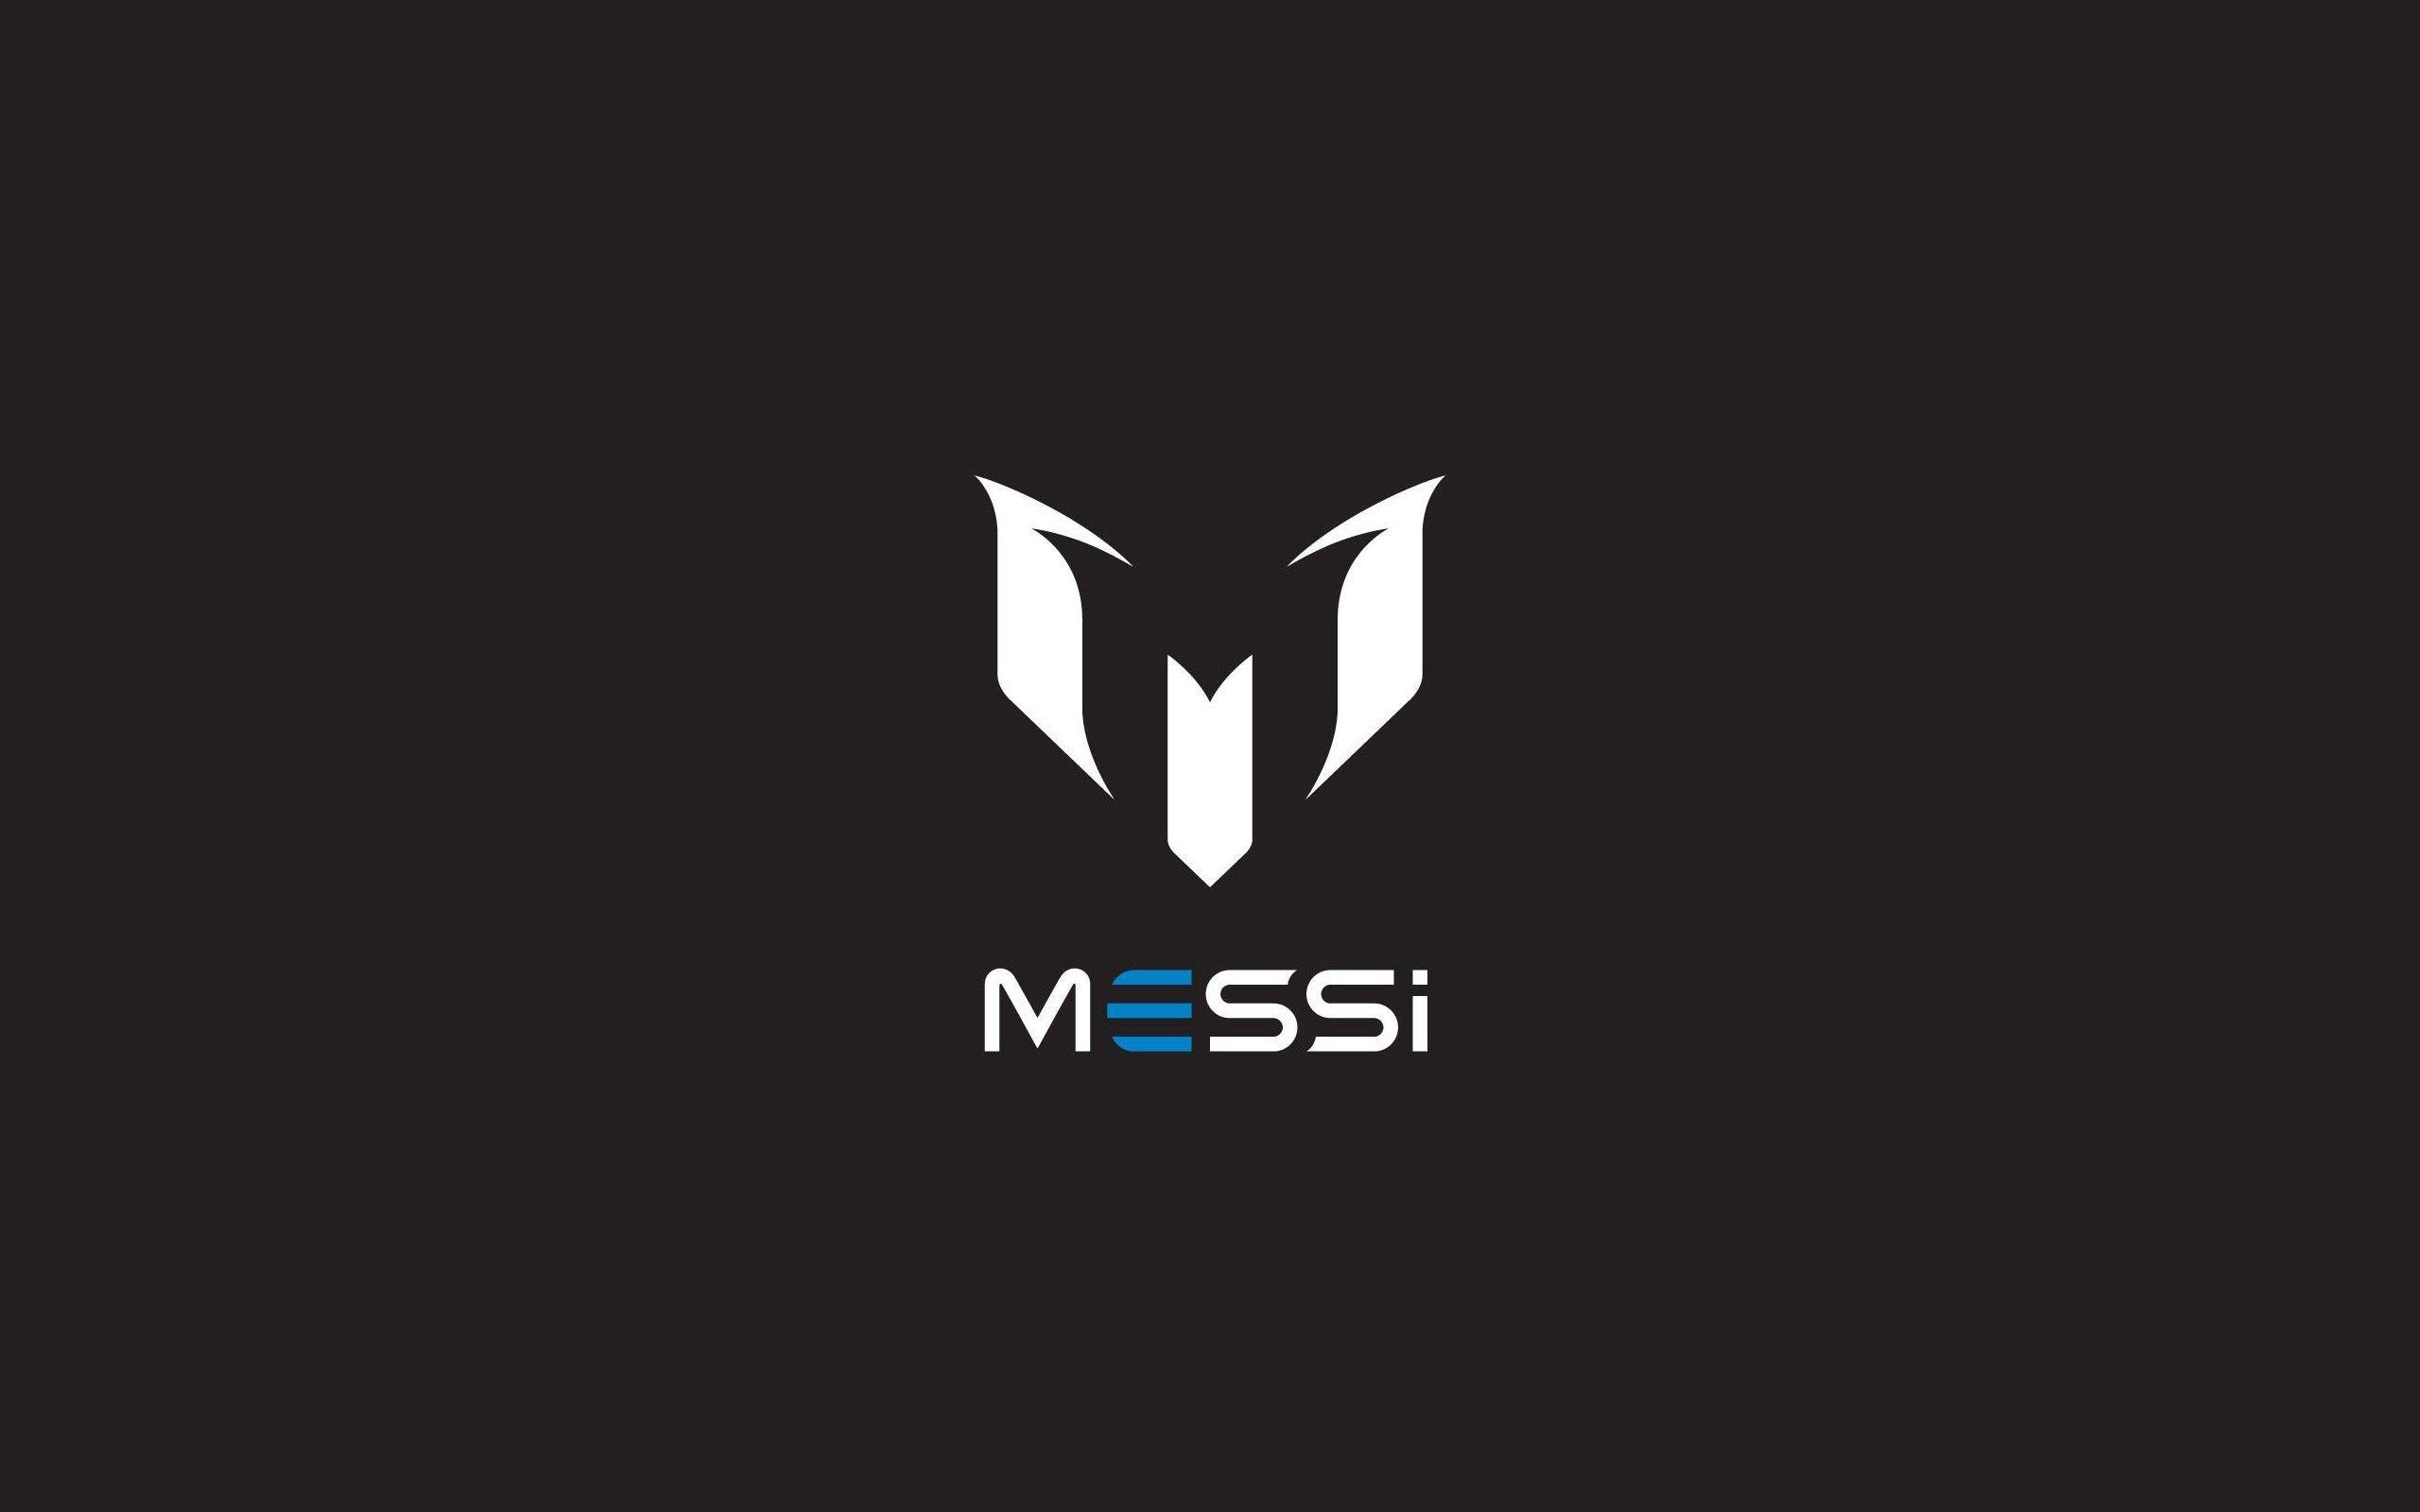 Messi logo Adidas wallpaper free desktop background and wallpaper